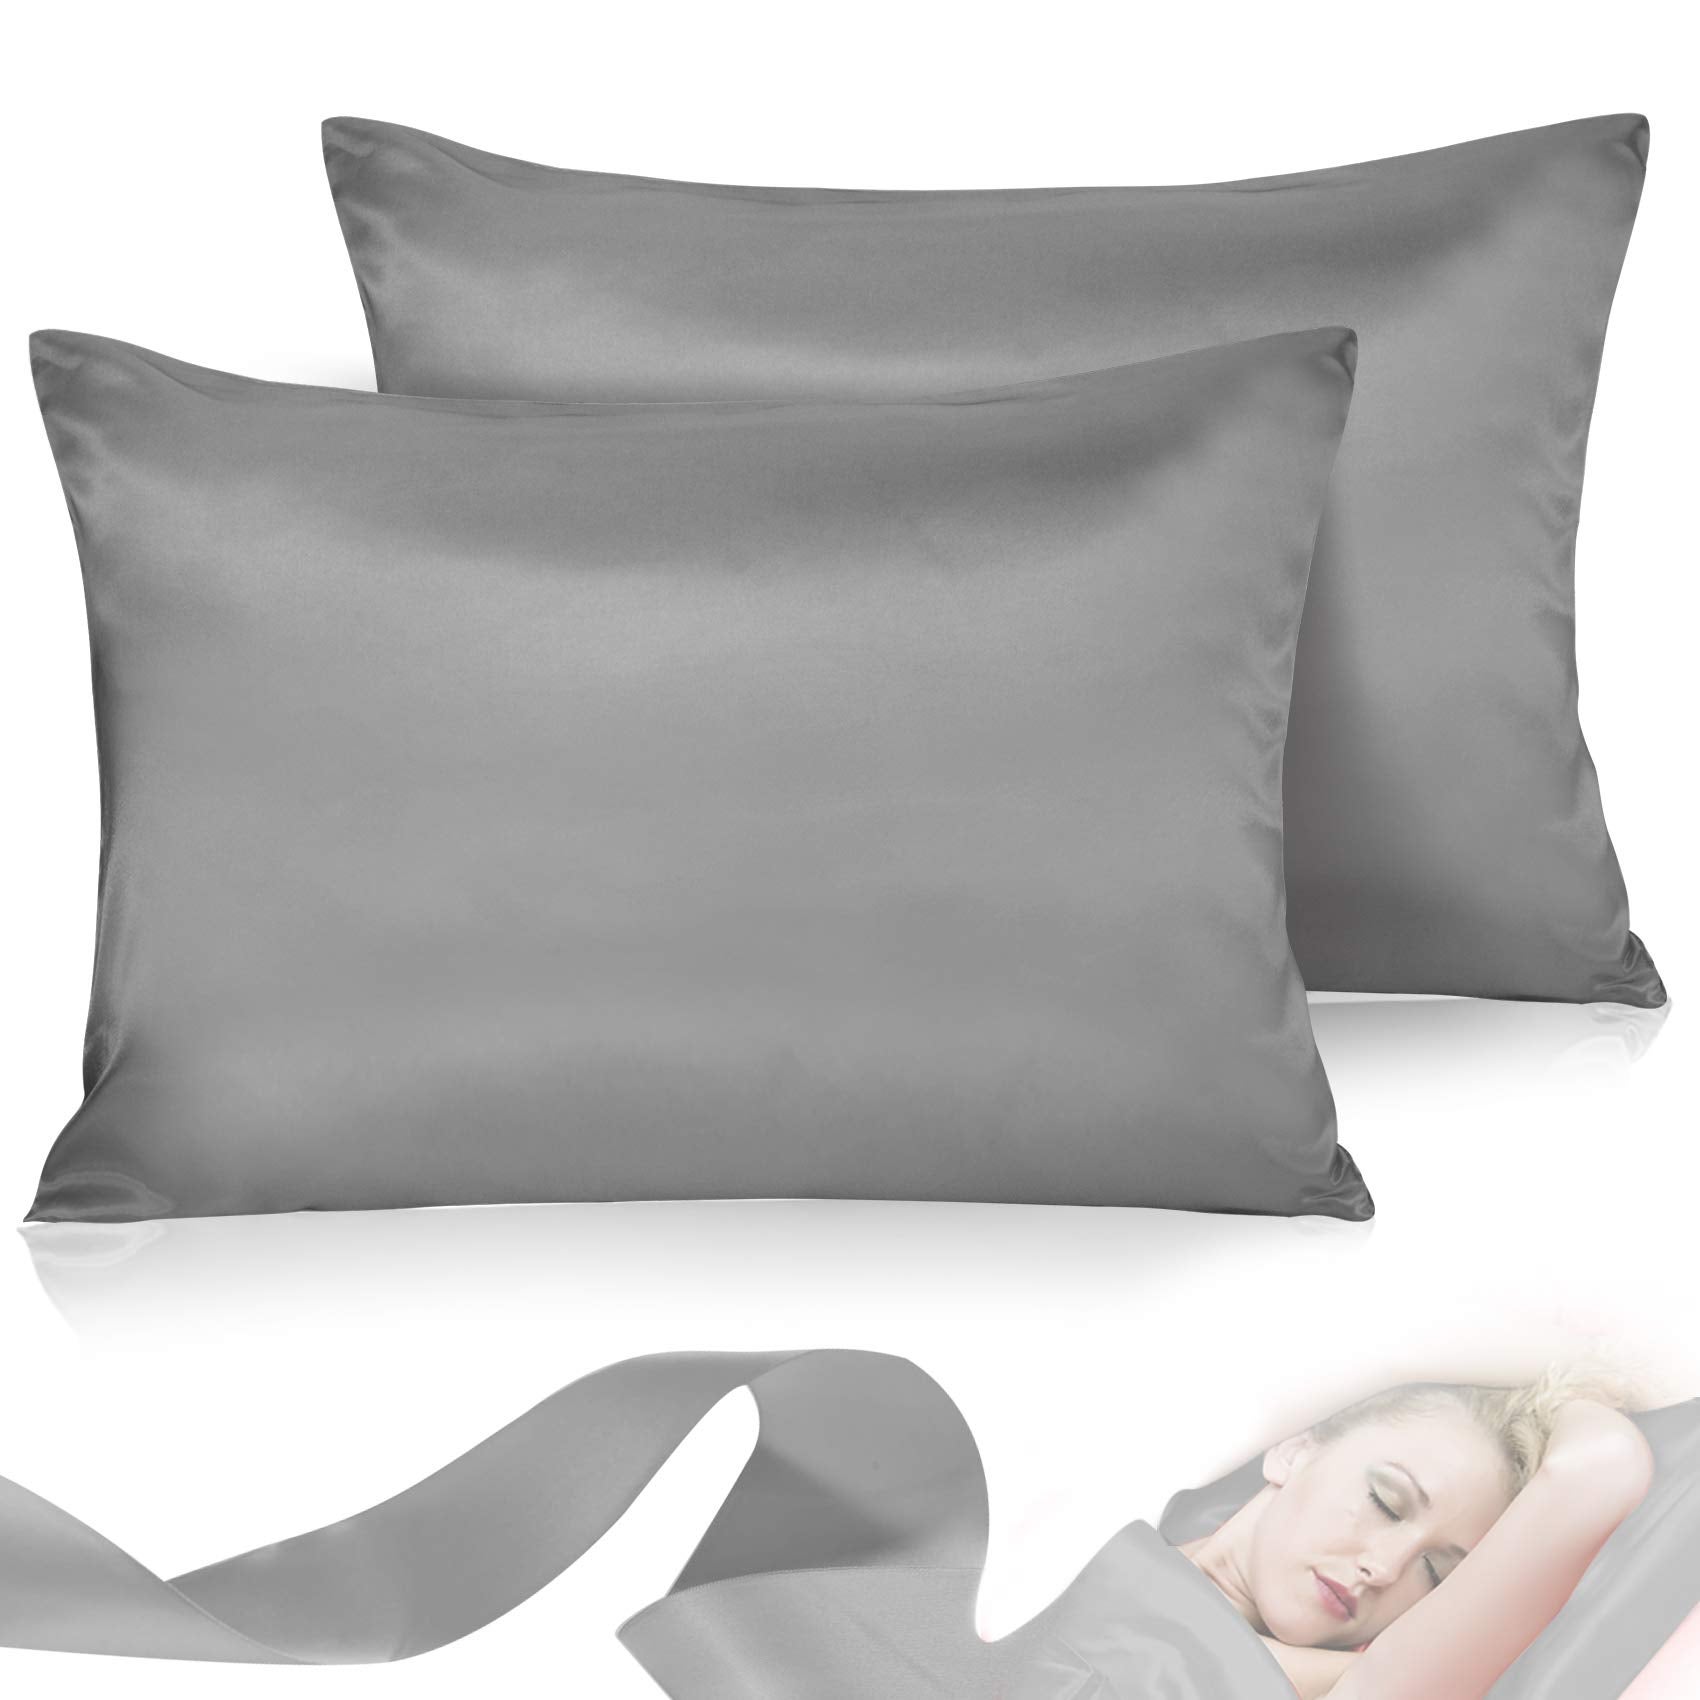 Why Is A Satin Pillowcase Good For Hair